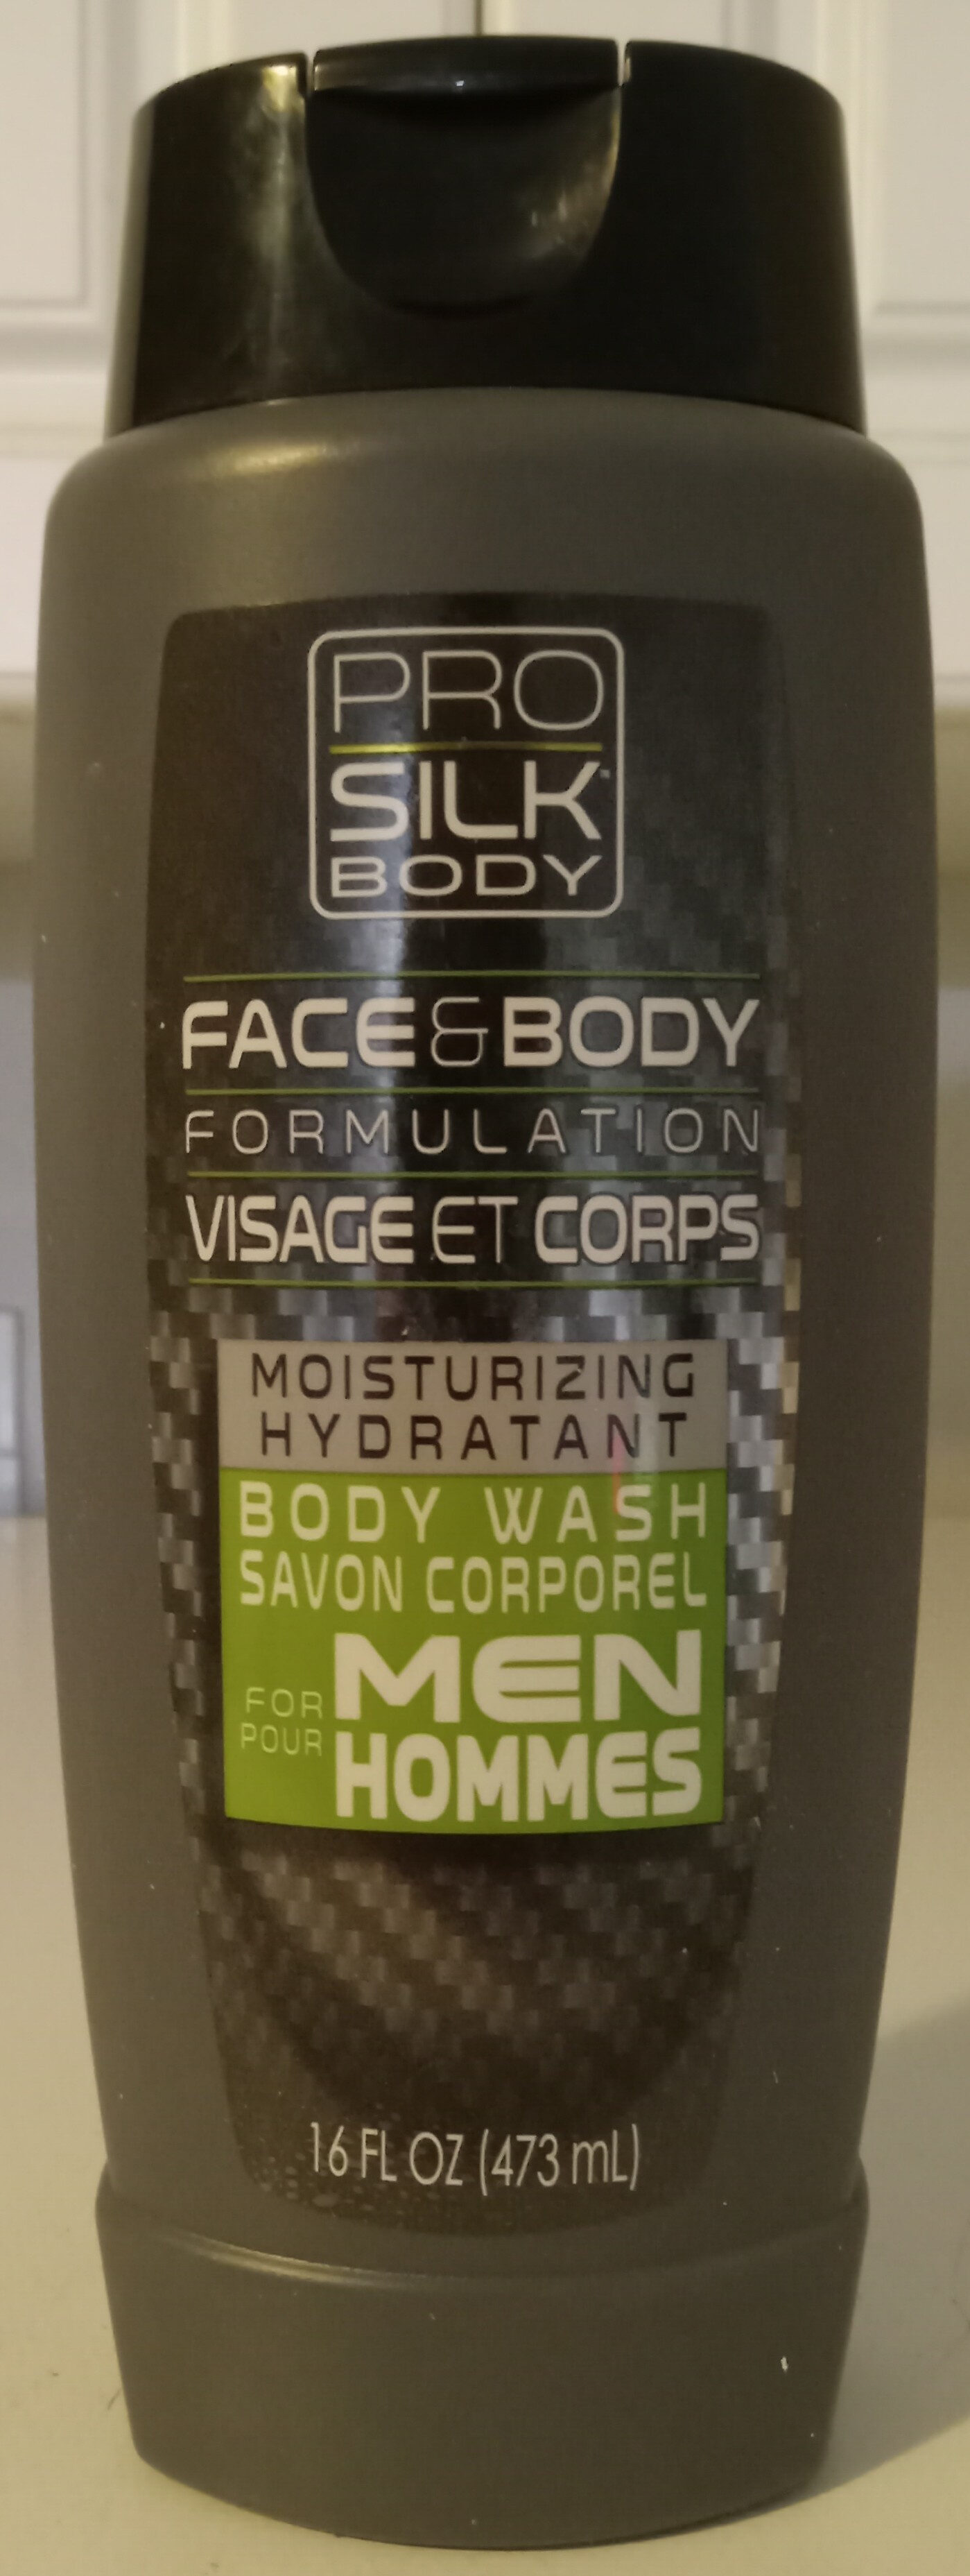 Face & Body Formulation Moisturizing Body Wash for Men - Tuote - en